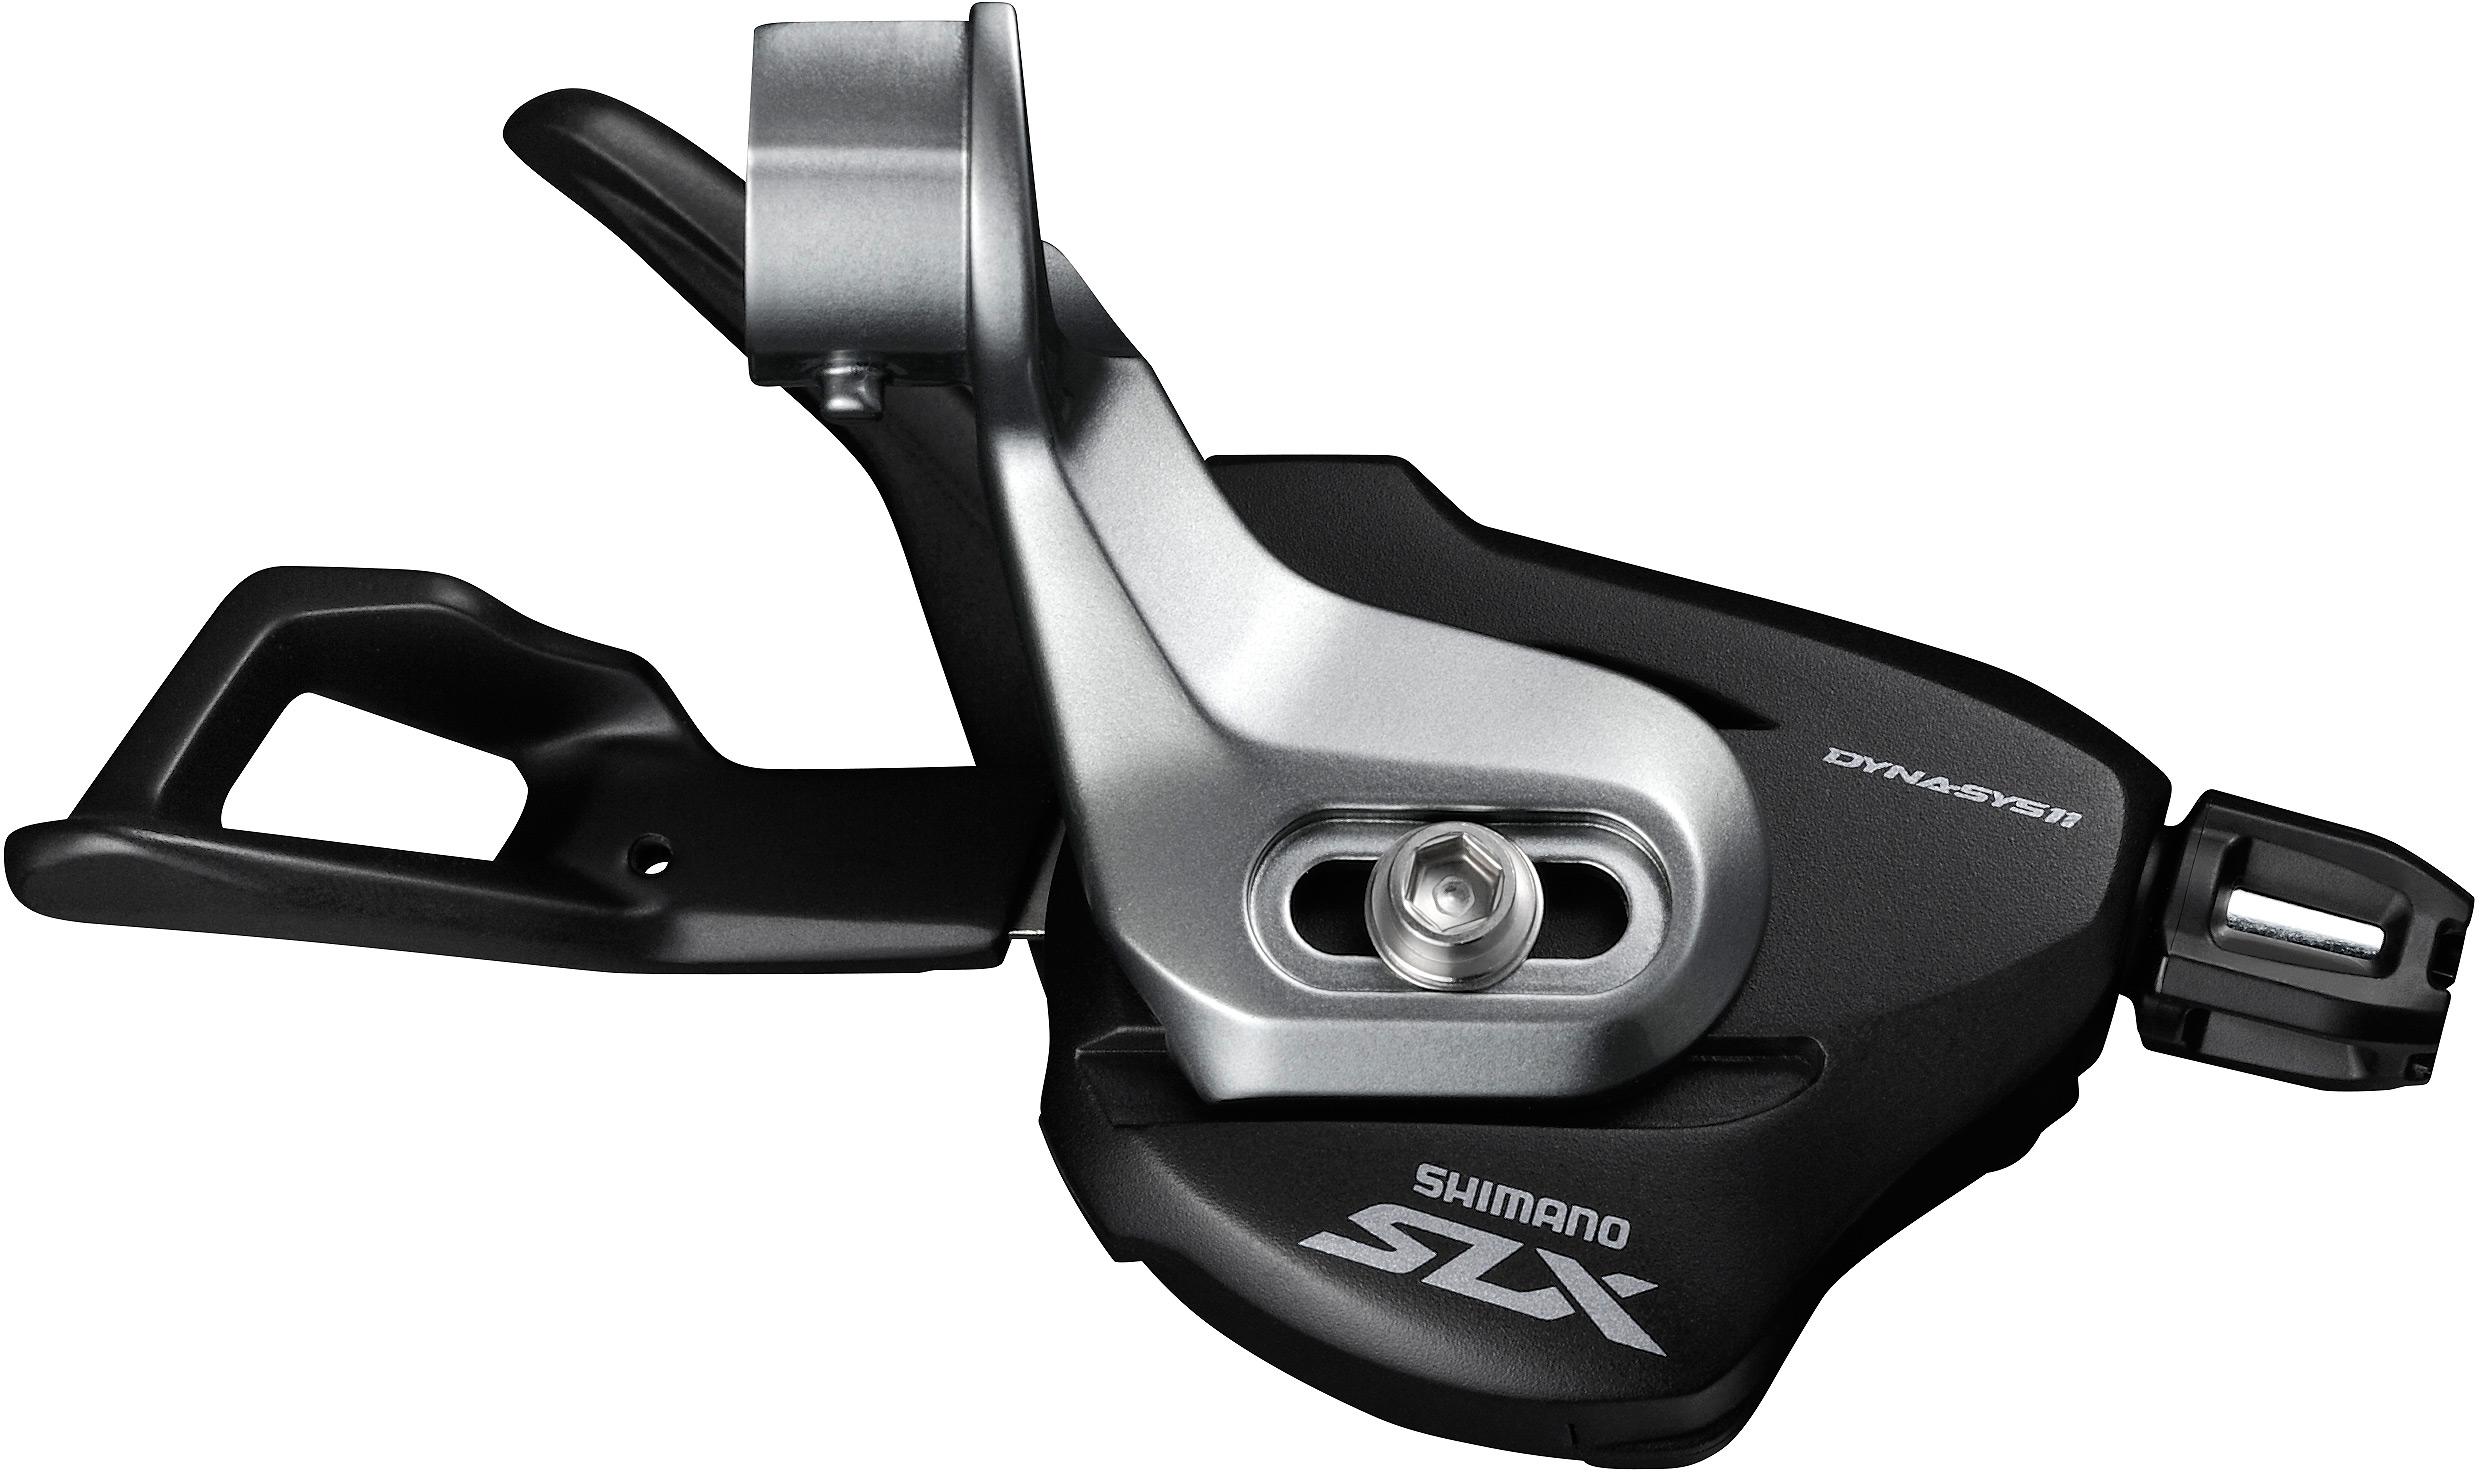 Shimano Slx M7000 11 Speed Gear Shifter - Black